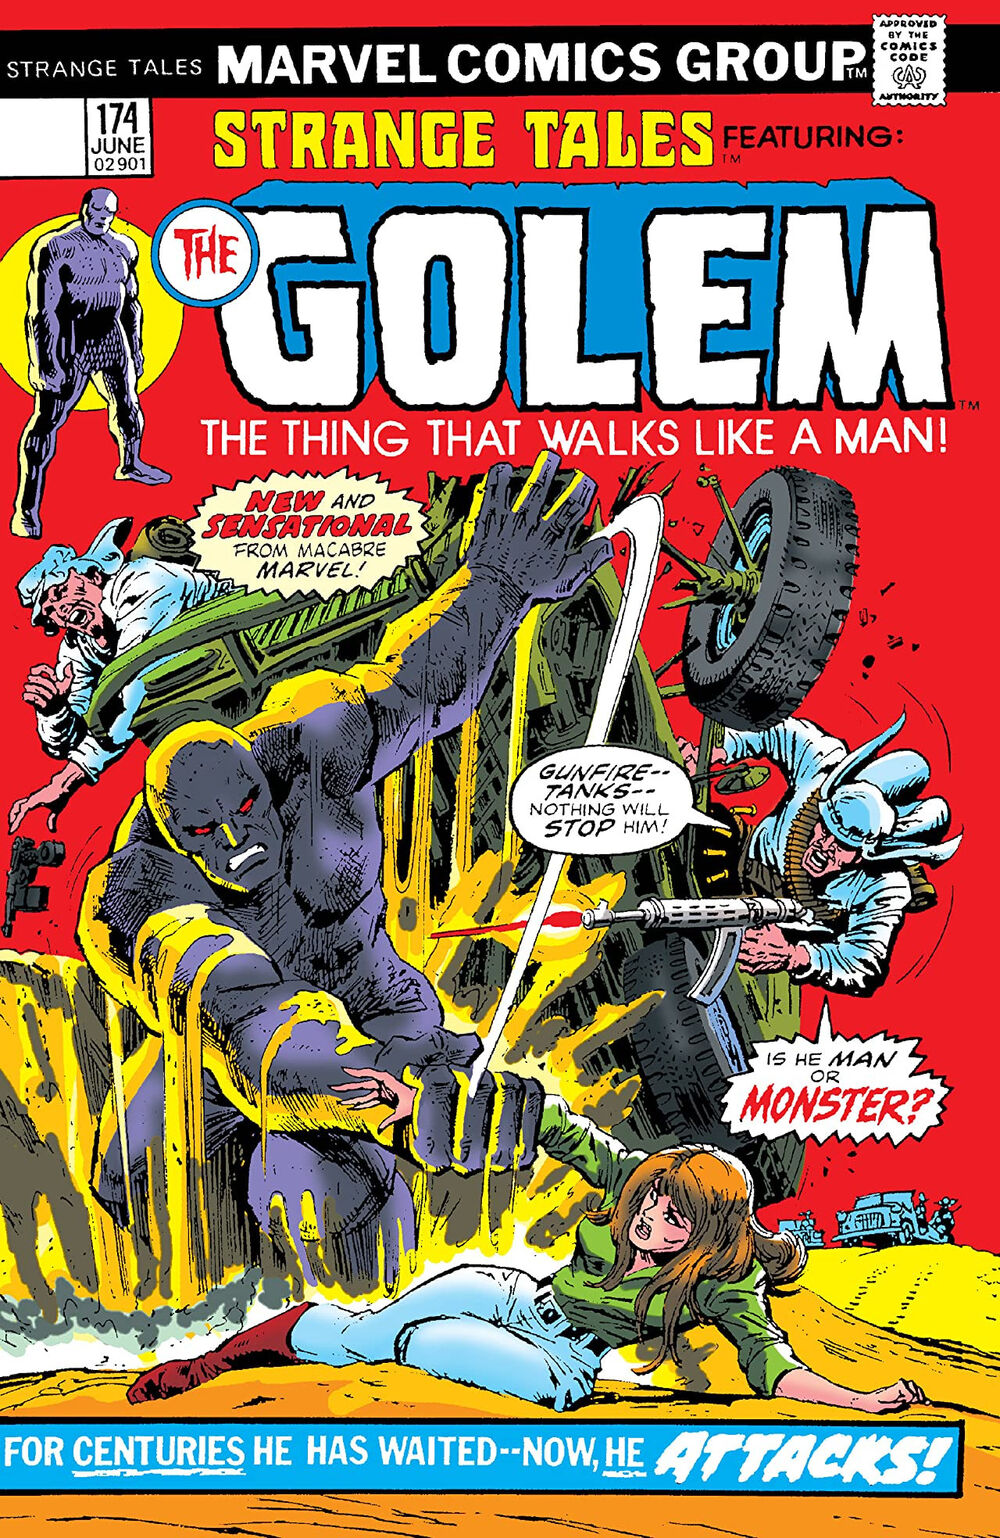 Strange Tales Featuring: The Golem Volume 1 #174